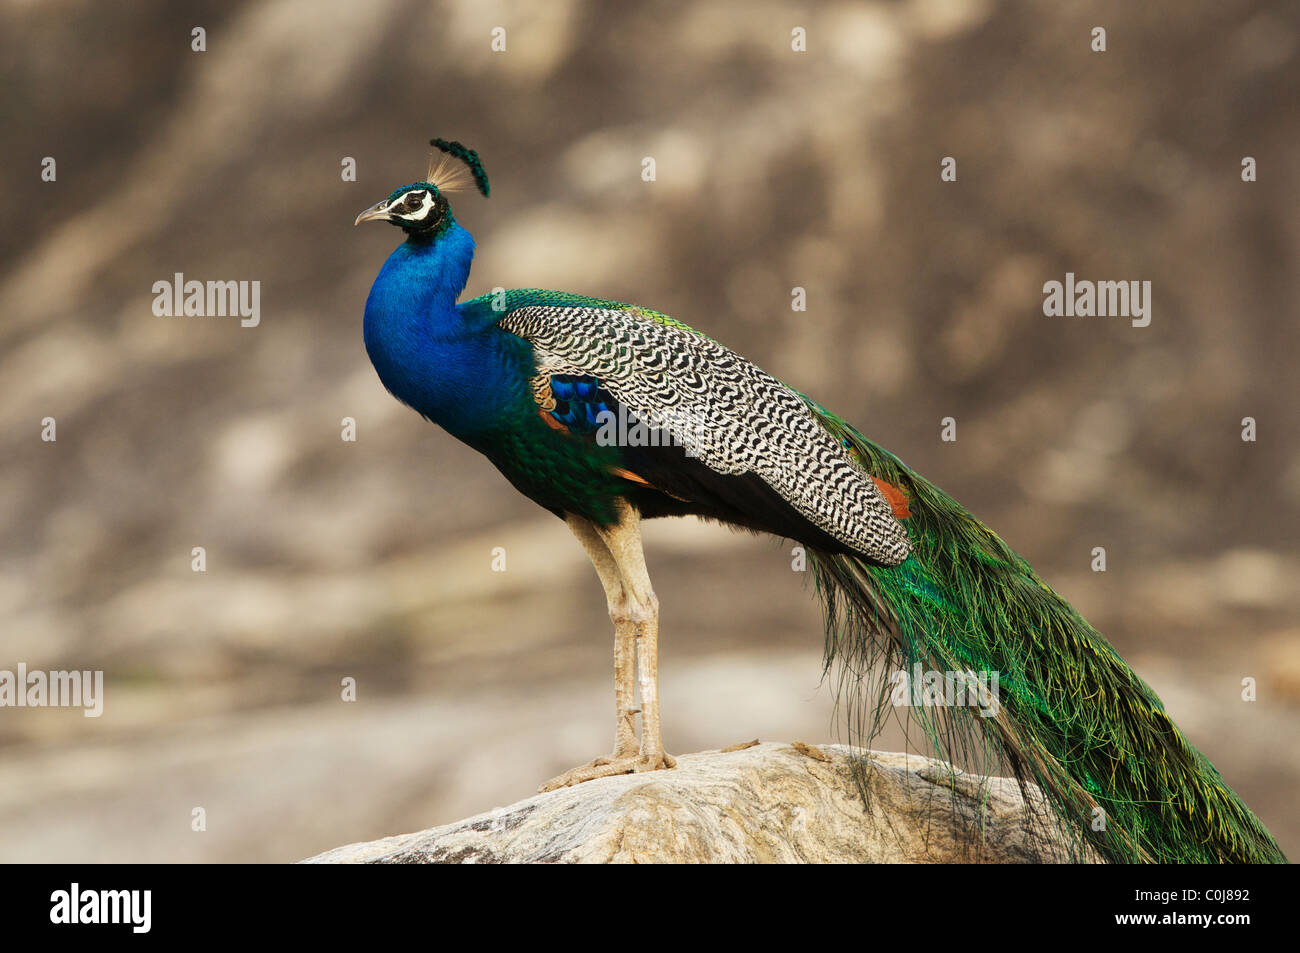 A peacock on a rock, Yala National Park Sri Lanka Stock Photo